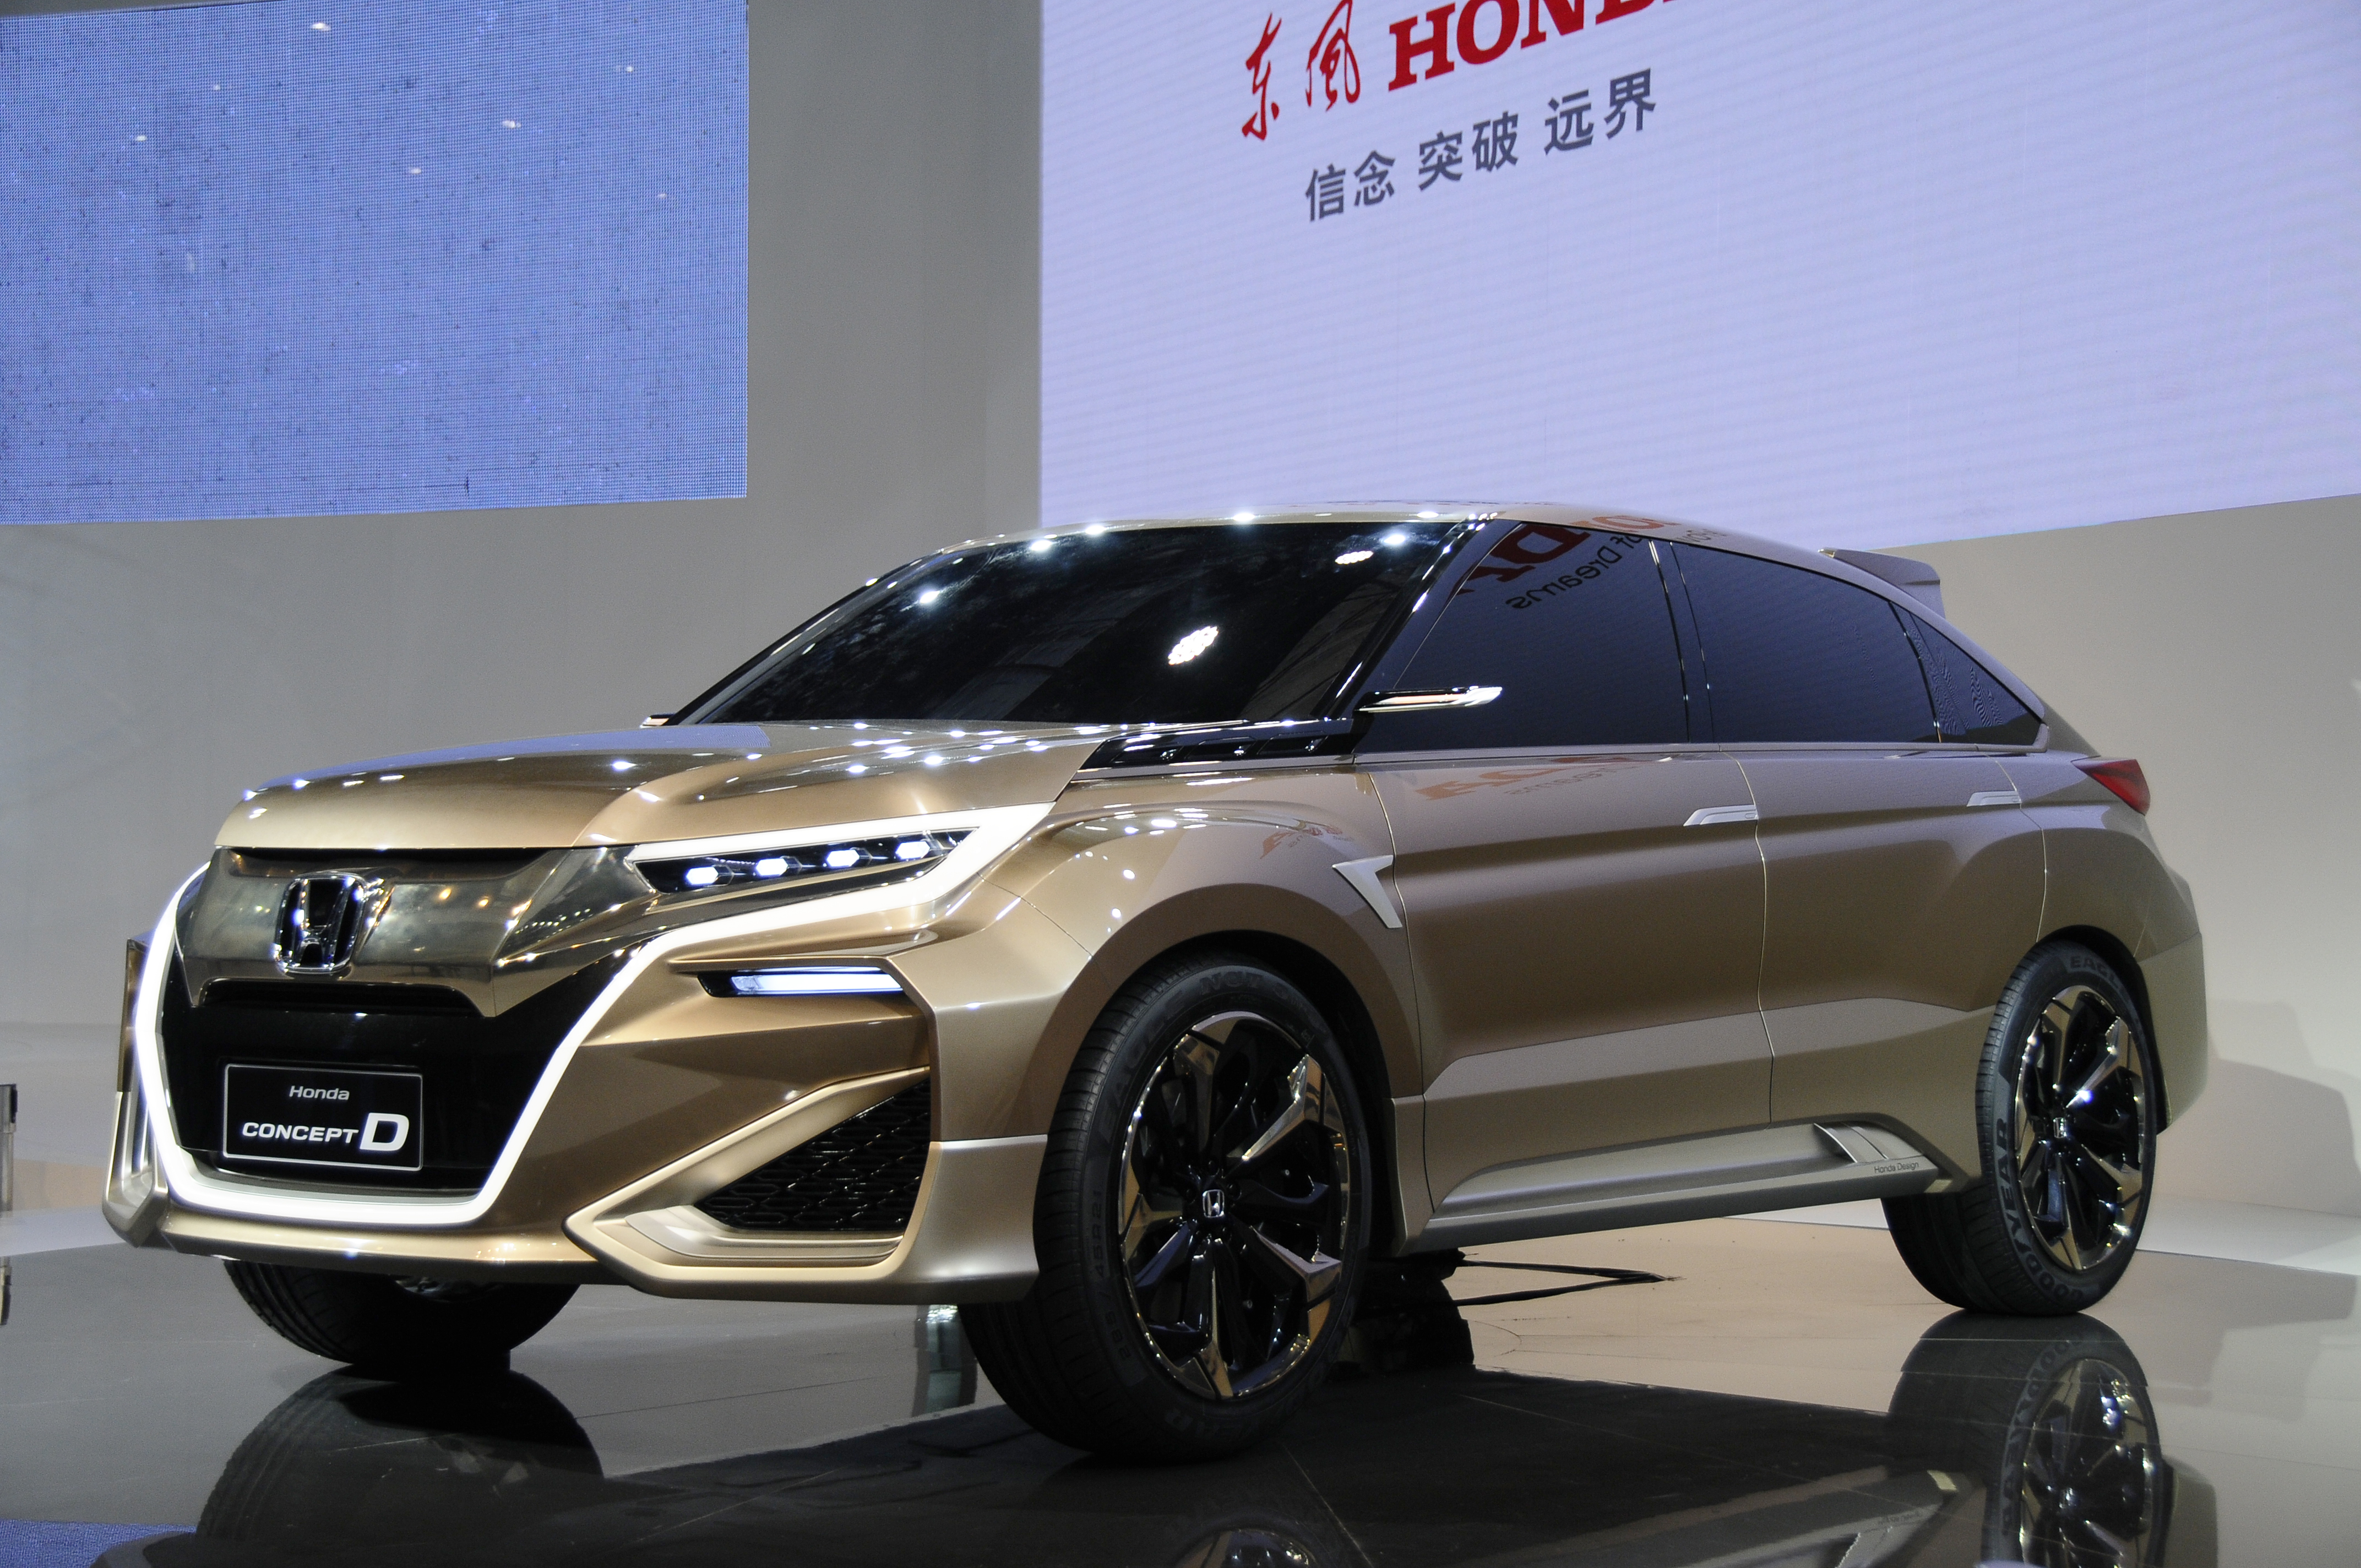 Хонда urv. Хонда 2020 кроссовер URV. New Honda SUV. Хонда концепт д. Китайский автомобиль URV.